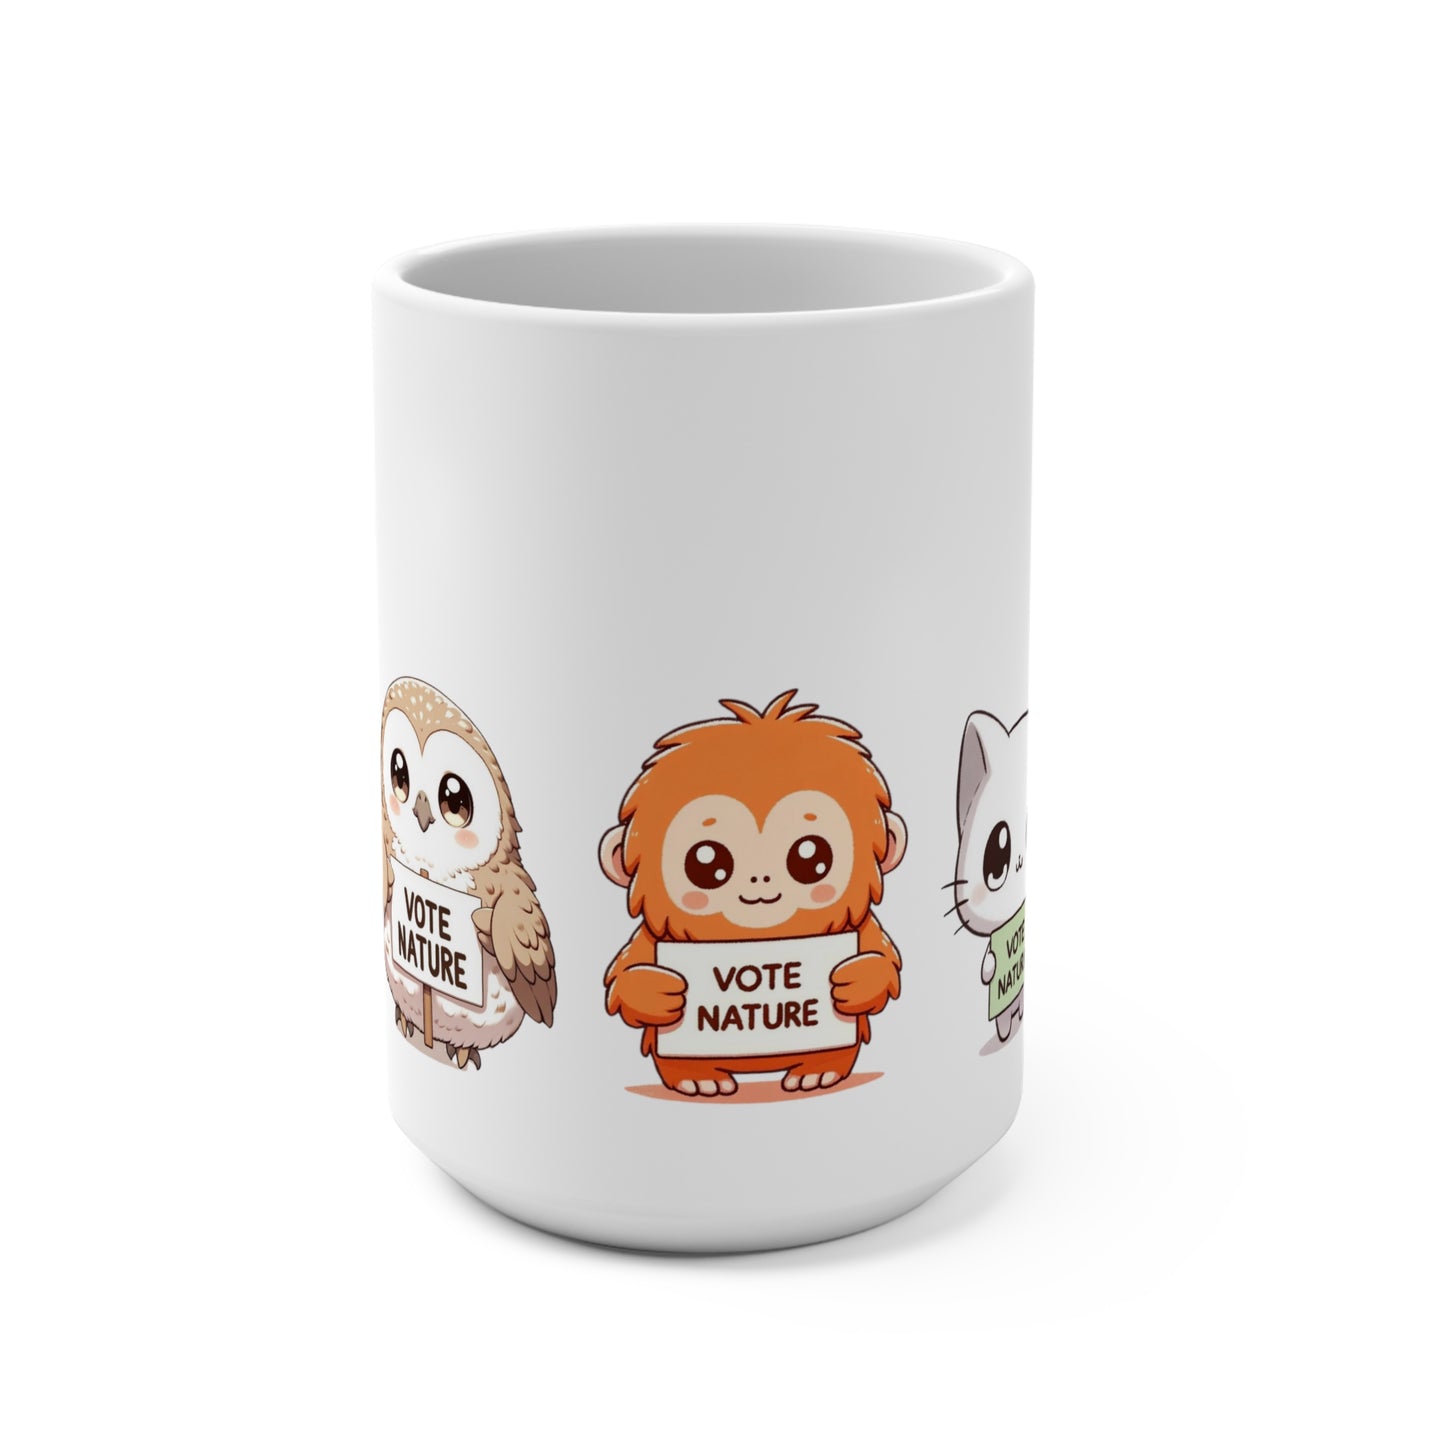 All the Cuteness! Inspirational Statement Coffee Mug (15oz): Vote Nature! Cute orangutan, fox, panda, owl, and cat! All in one!